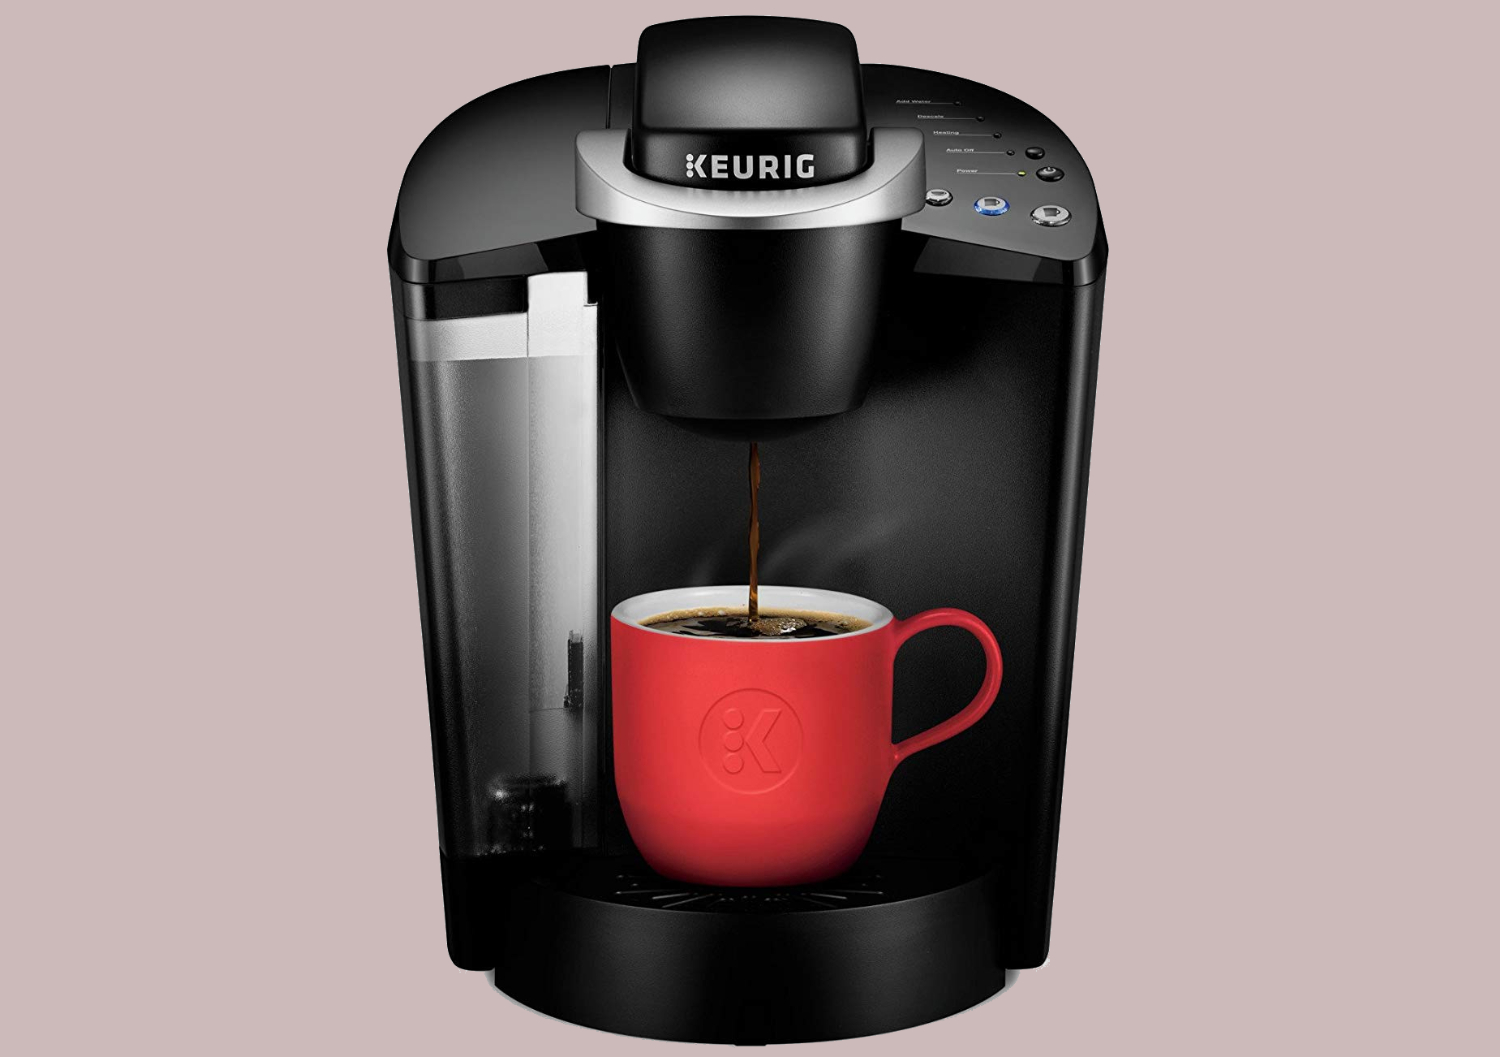 https://www.digitaltrends.com/wp-content/uploads/2019/08/keurig-k-classic-coffee-maker-k-cup-pod-single-serve-programmable-black-1.jpg?fit=720%2C507&p=1